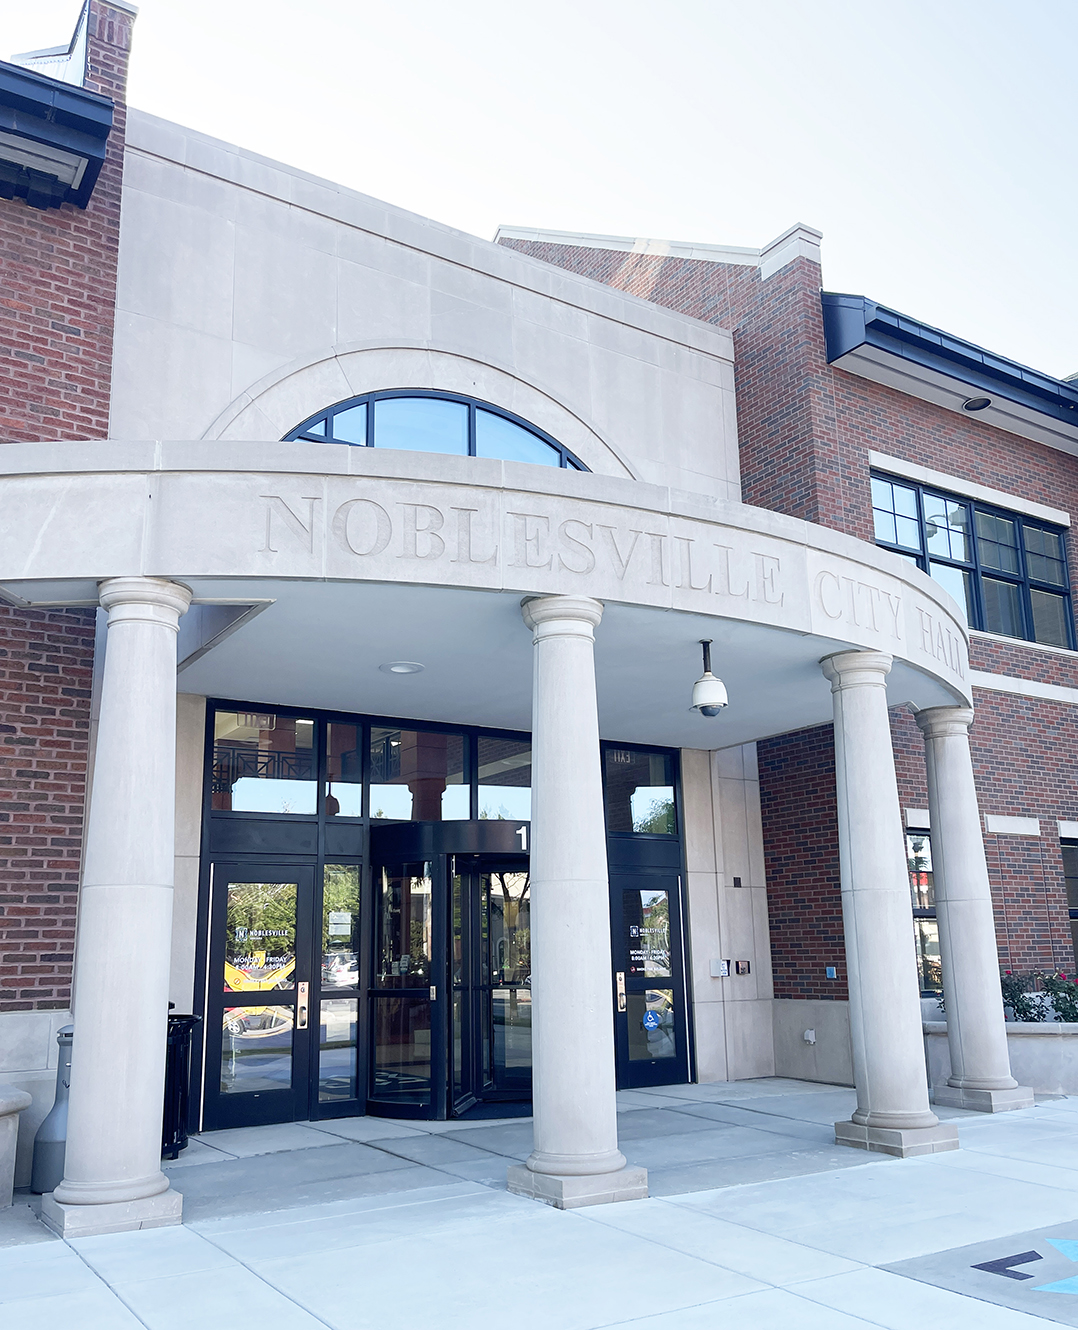 Noblesville Common Council approves audit committee ordinance, reviews development plans